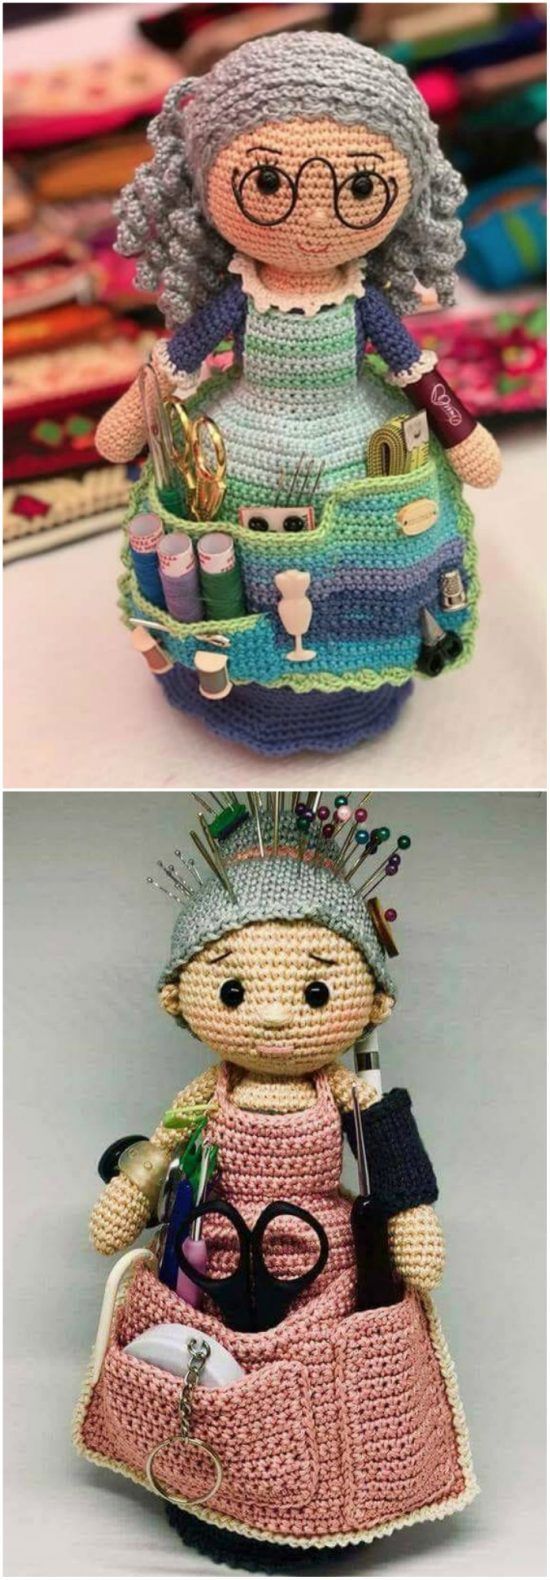 Crafter-Granny-Crochet-Doll-Free-Pattern-Crochet-and-Knitting.jpg